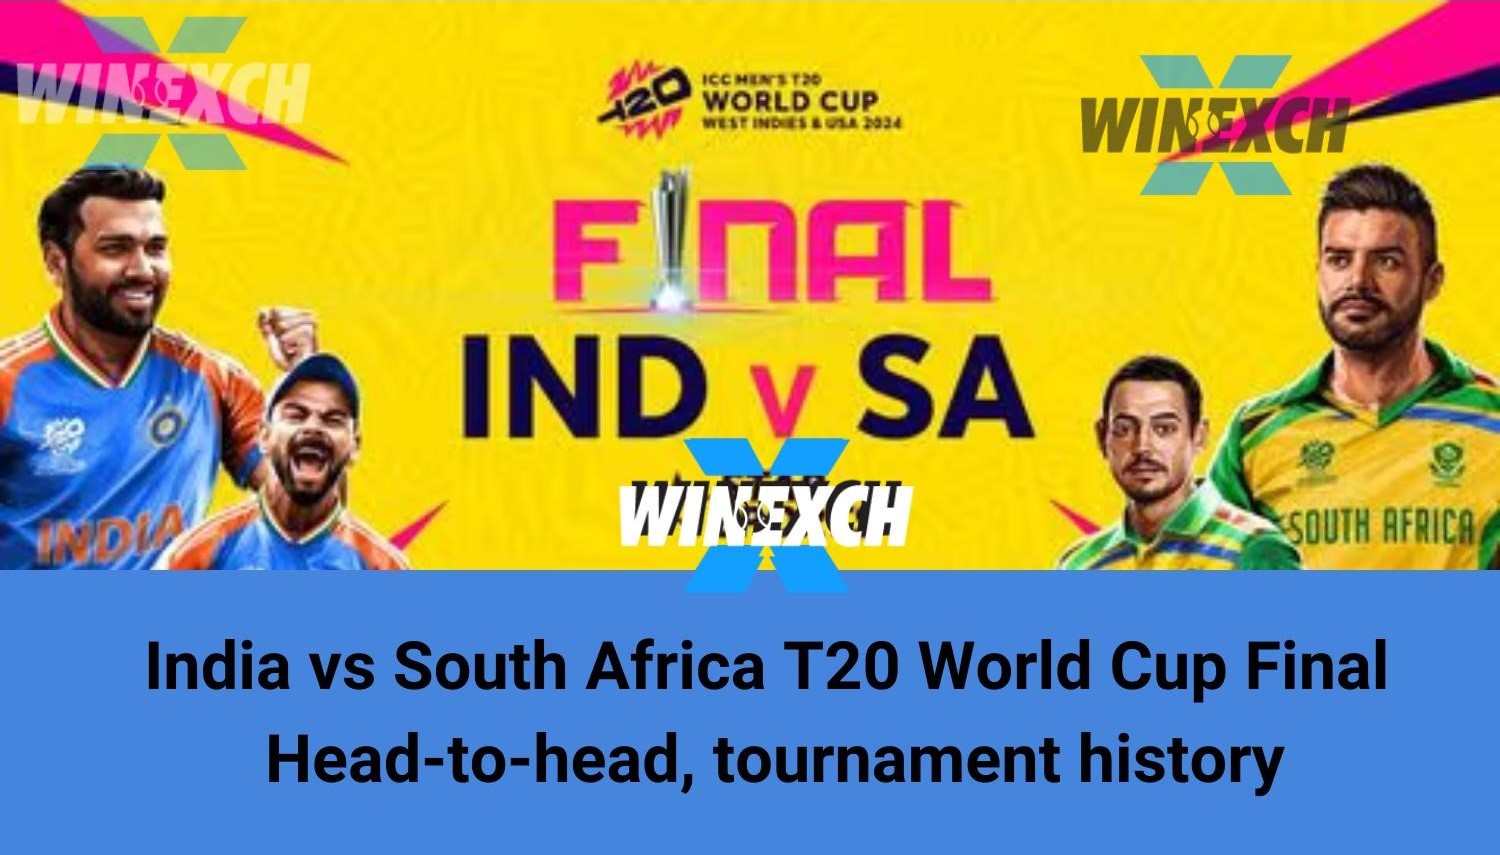 IND vs SA world cup final